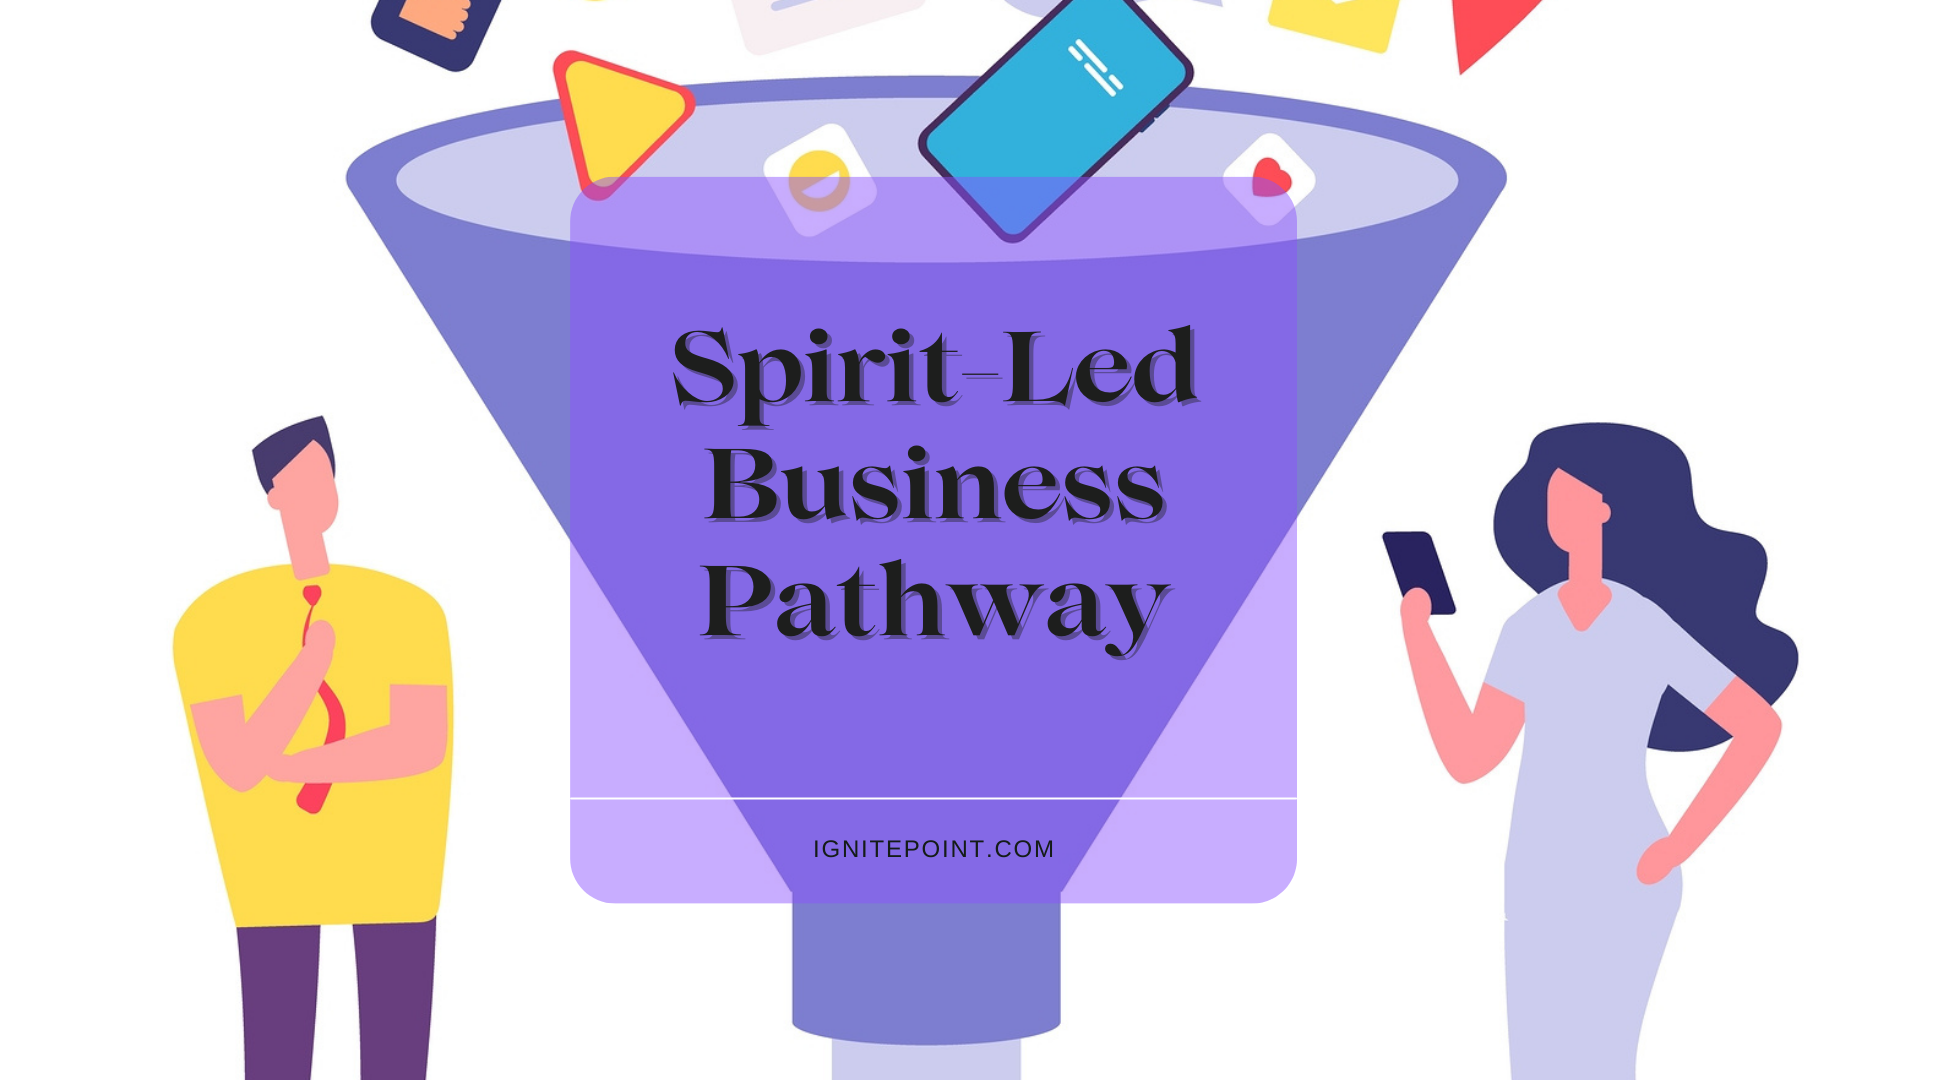 Spirit-Led Business Pathway